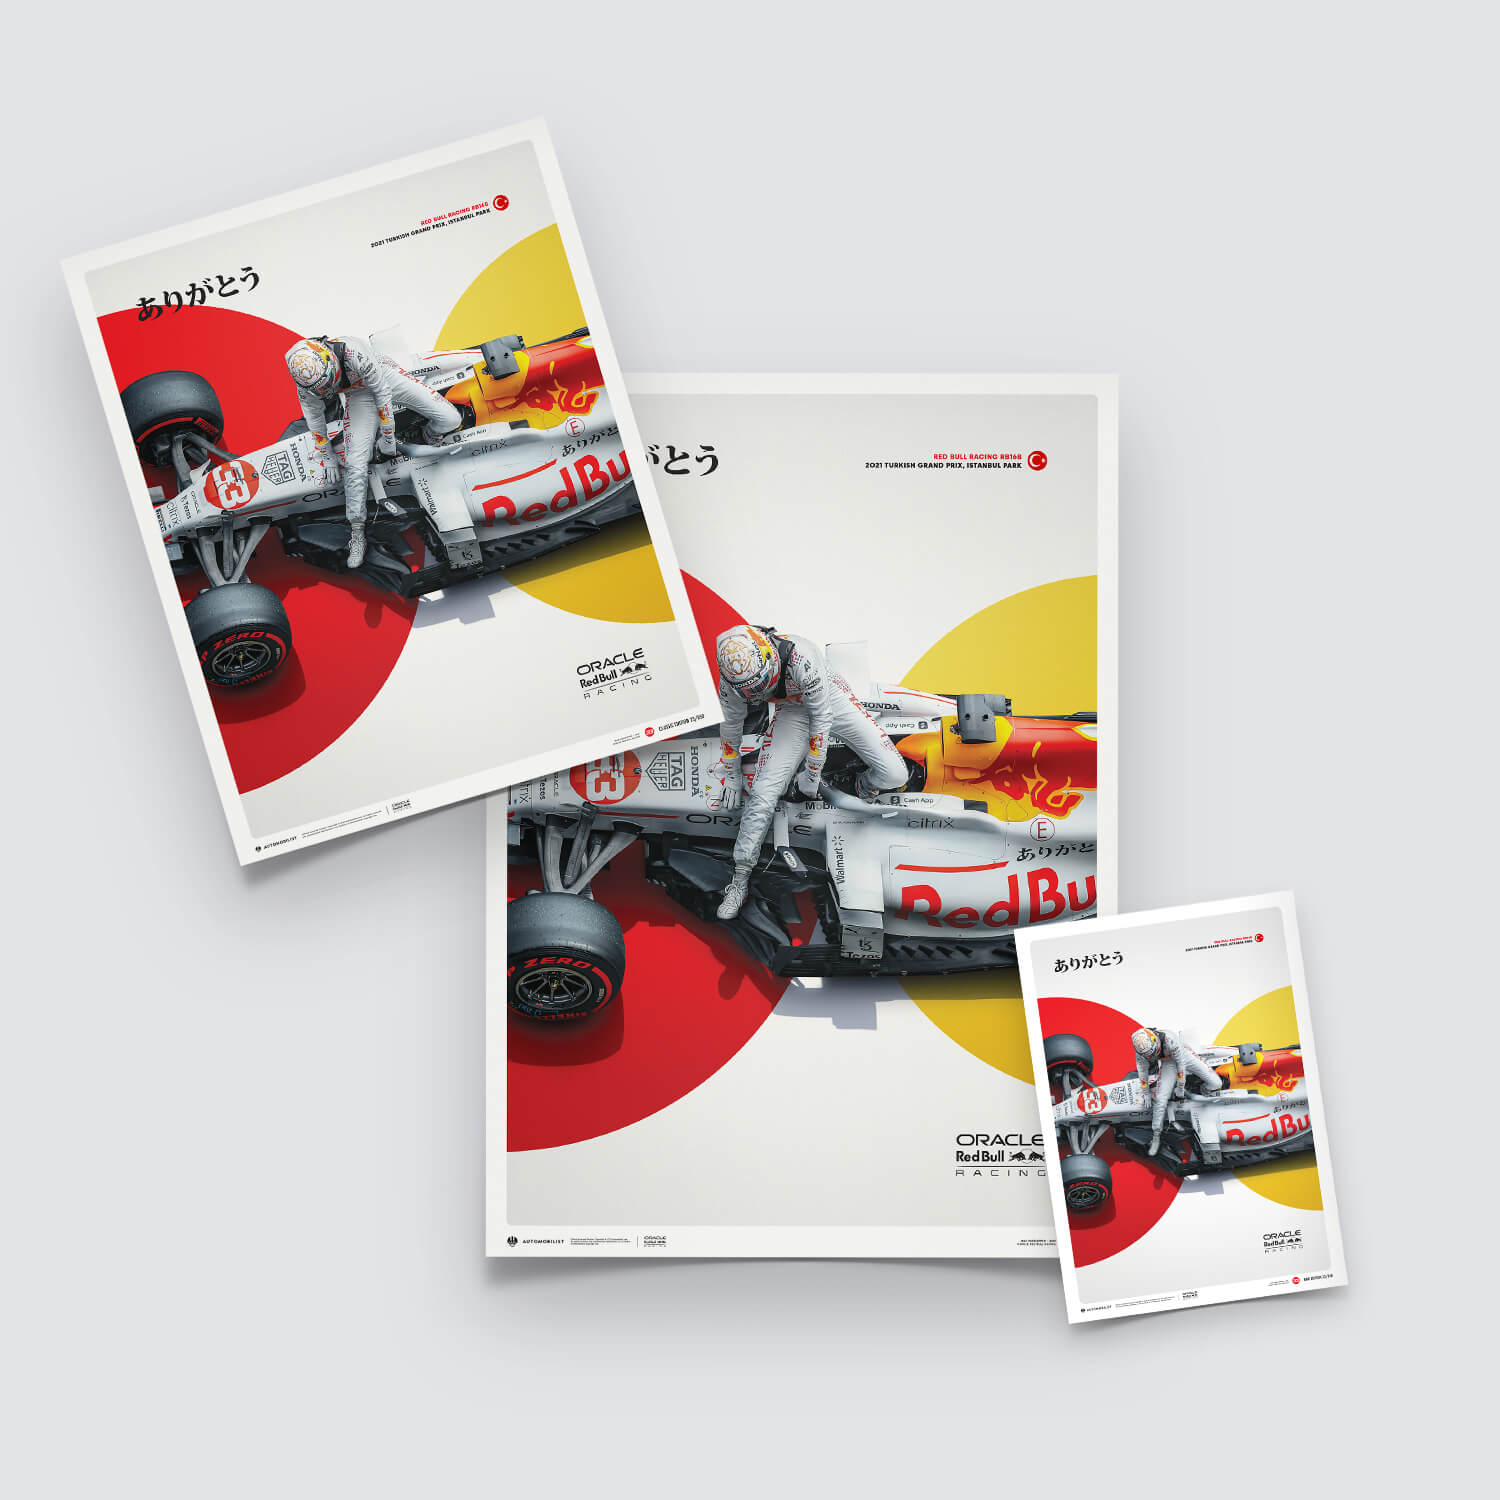 Oracle Red Bull Racing - The White Bull - Honda Livery - Grand Prix de Turquie - 2021